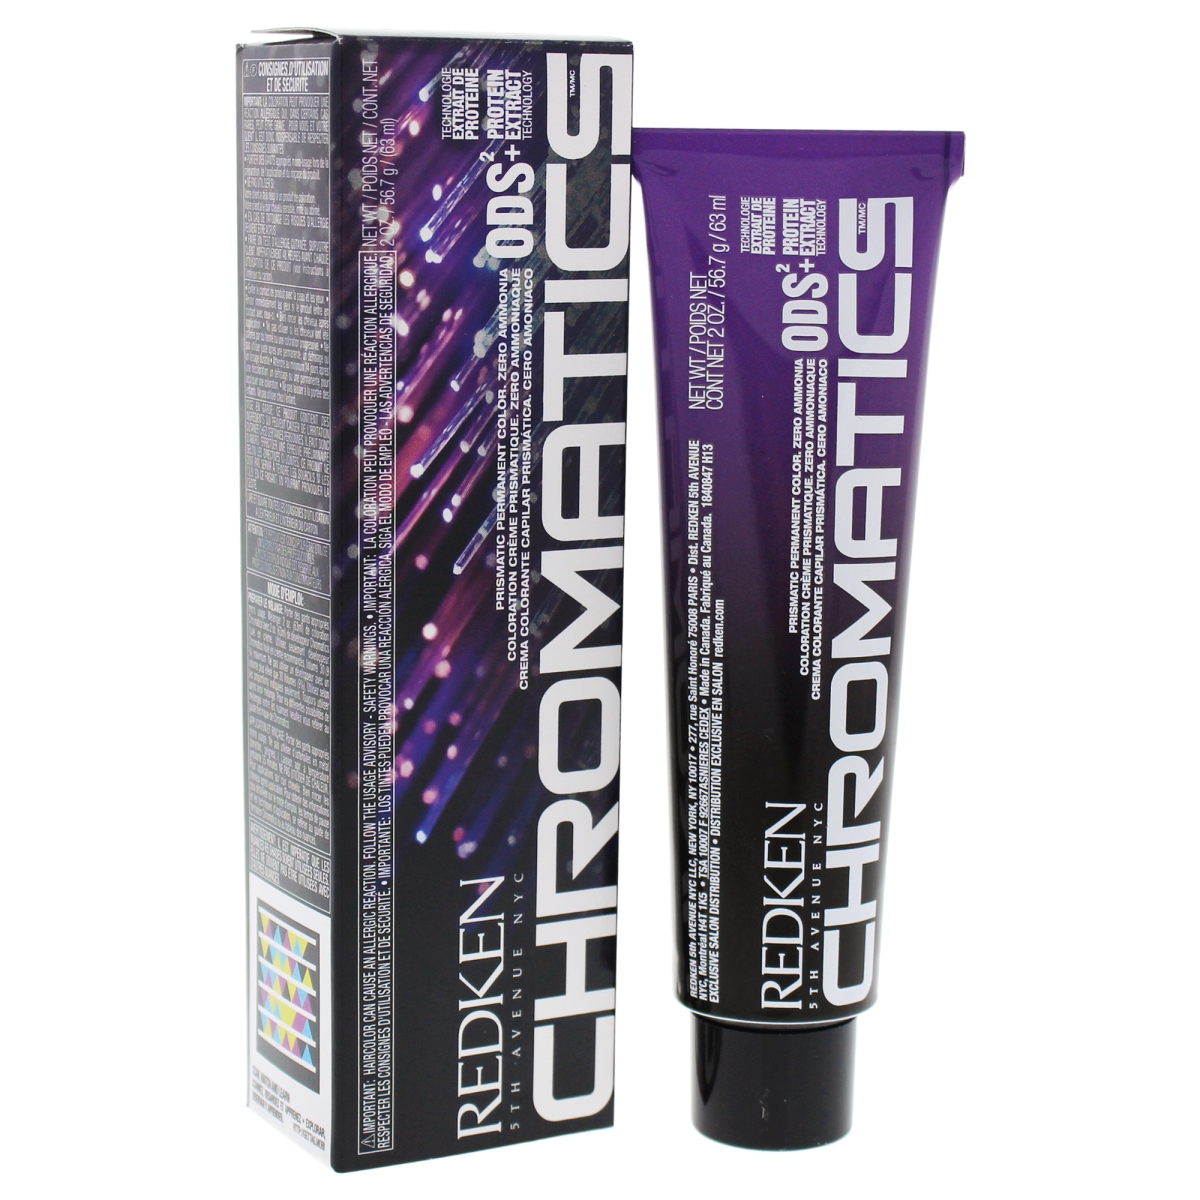 U-hc-11818 2 Oz Chromatics Prismatic Hair Color For Unisex - 6m Mocha & Moka